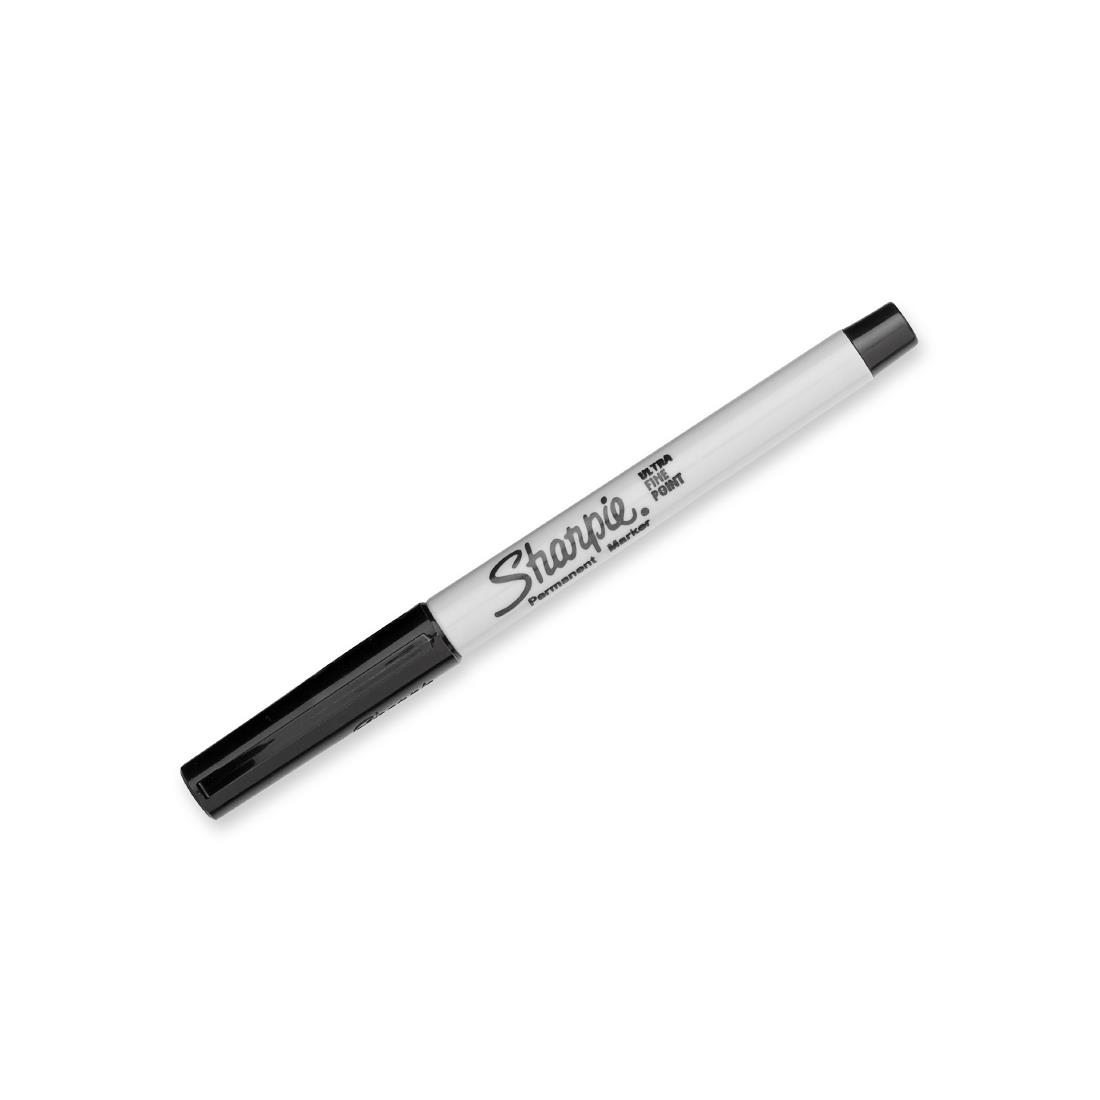 Sharpie Ultra Fine Permanent Marker Black (Pack of 2)